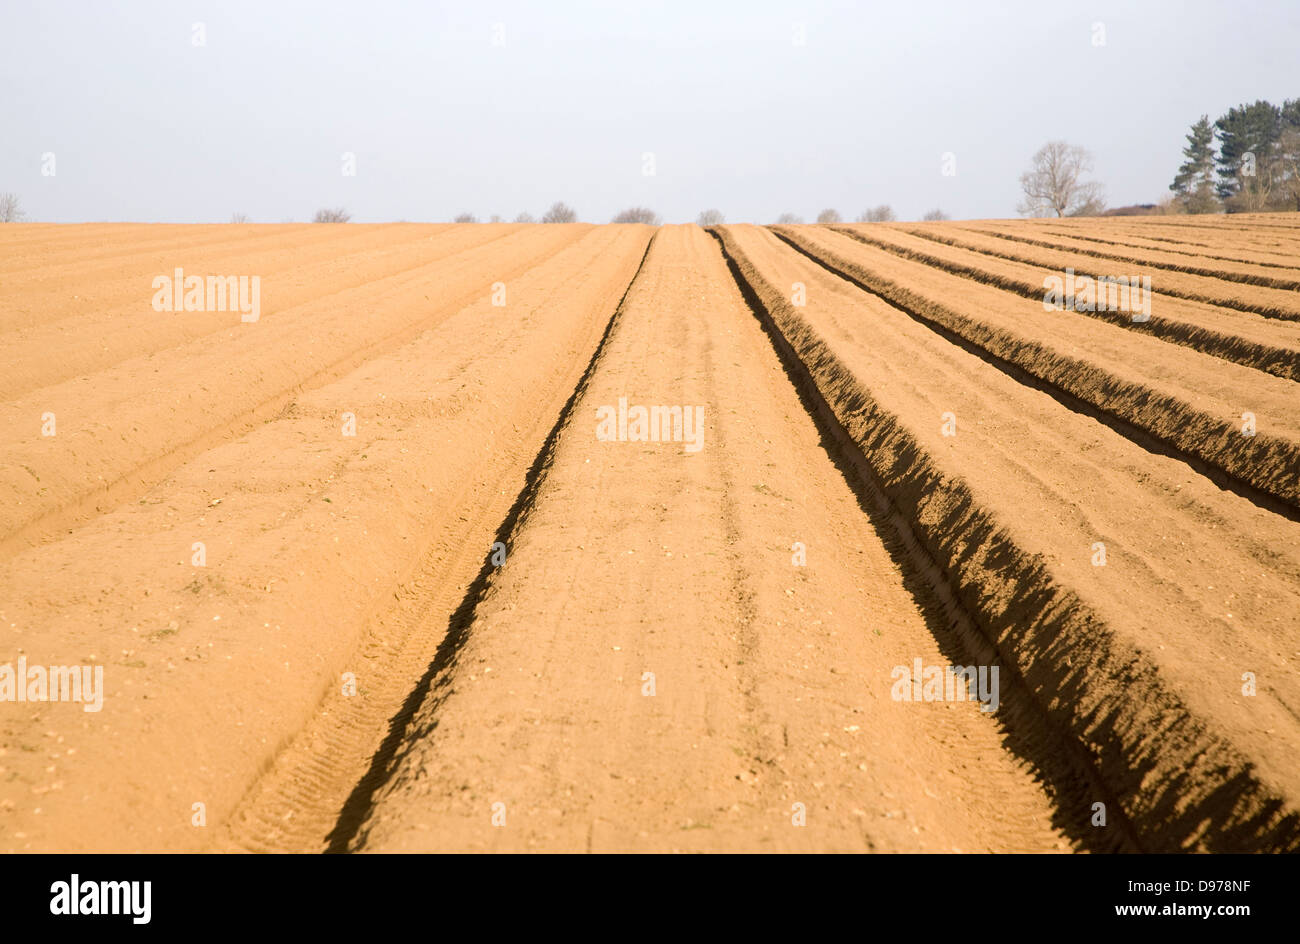 Furrows in hillside soil prepared for planting potato crop, Shottisham, Suffolk, England Stock Photo